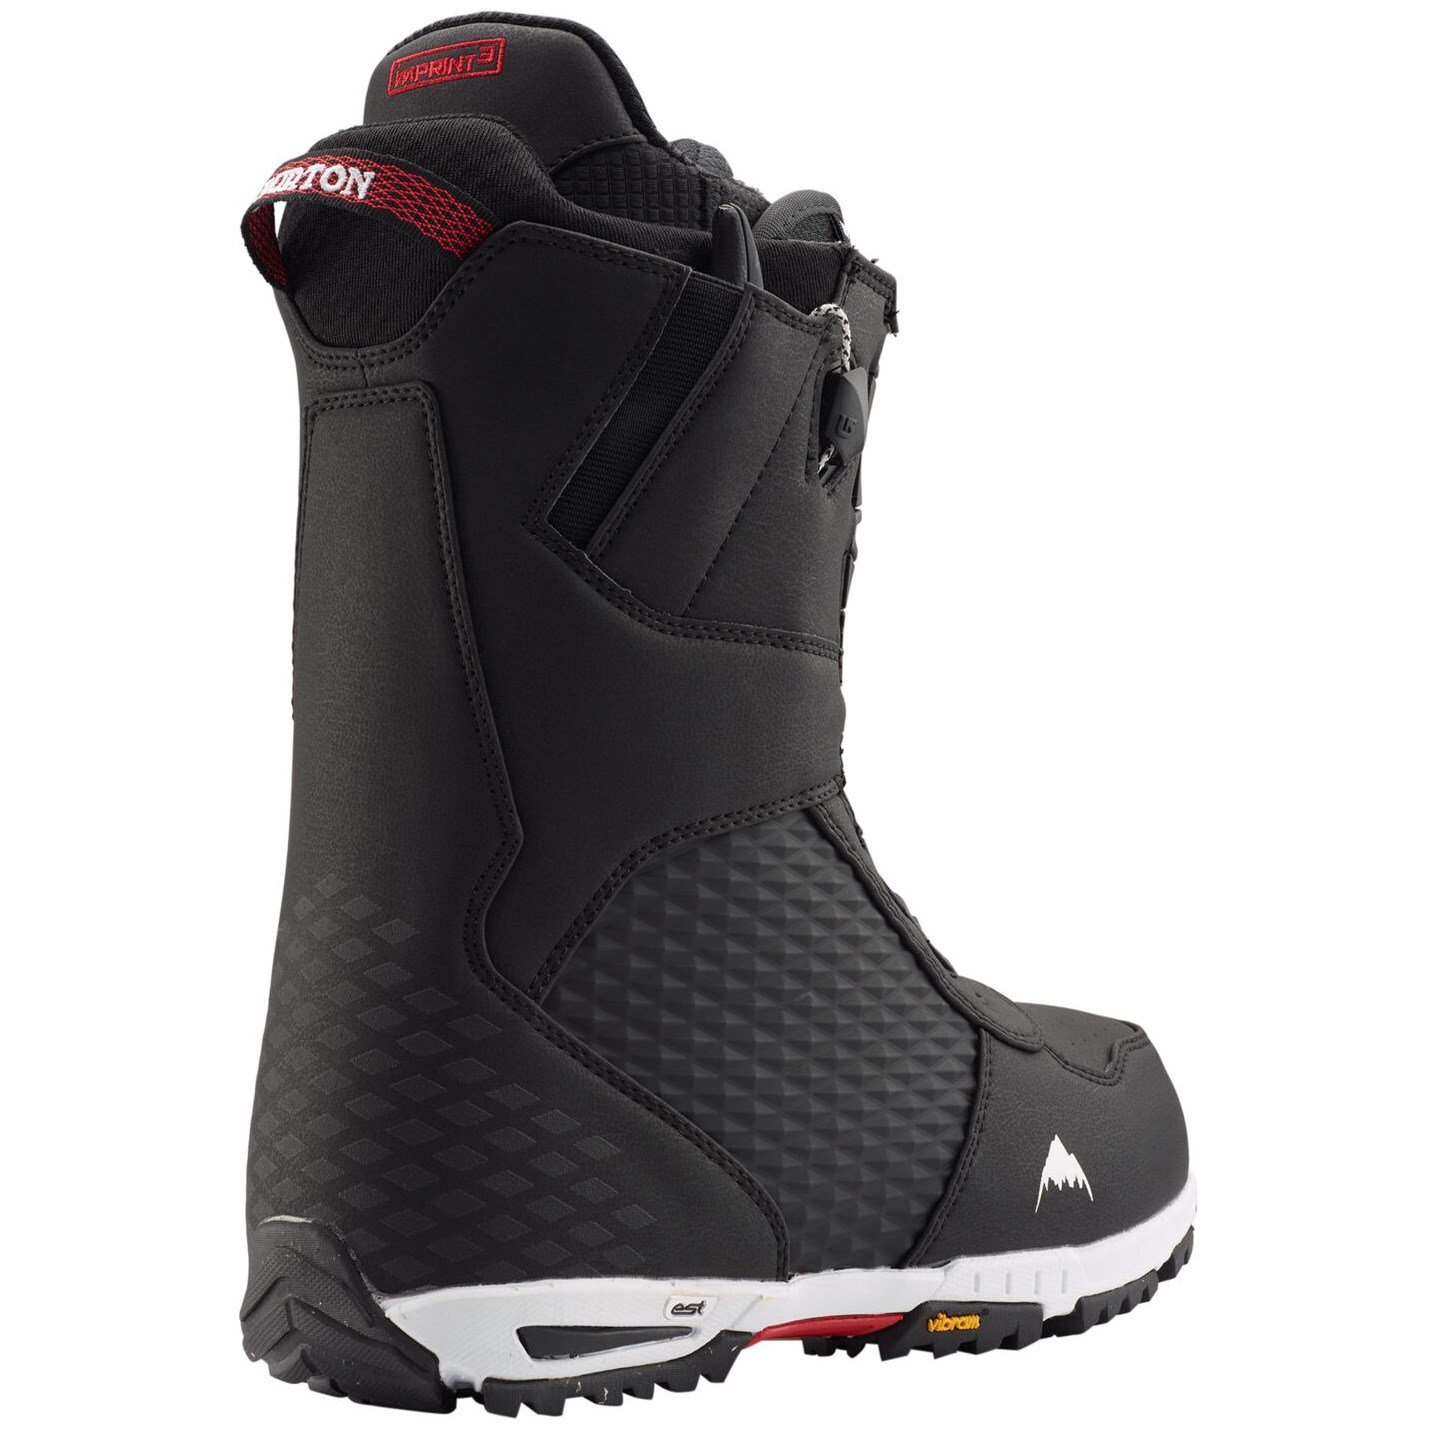 Burton Imperial Ltd Snowboard Boots 2020 | evo